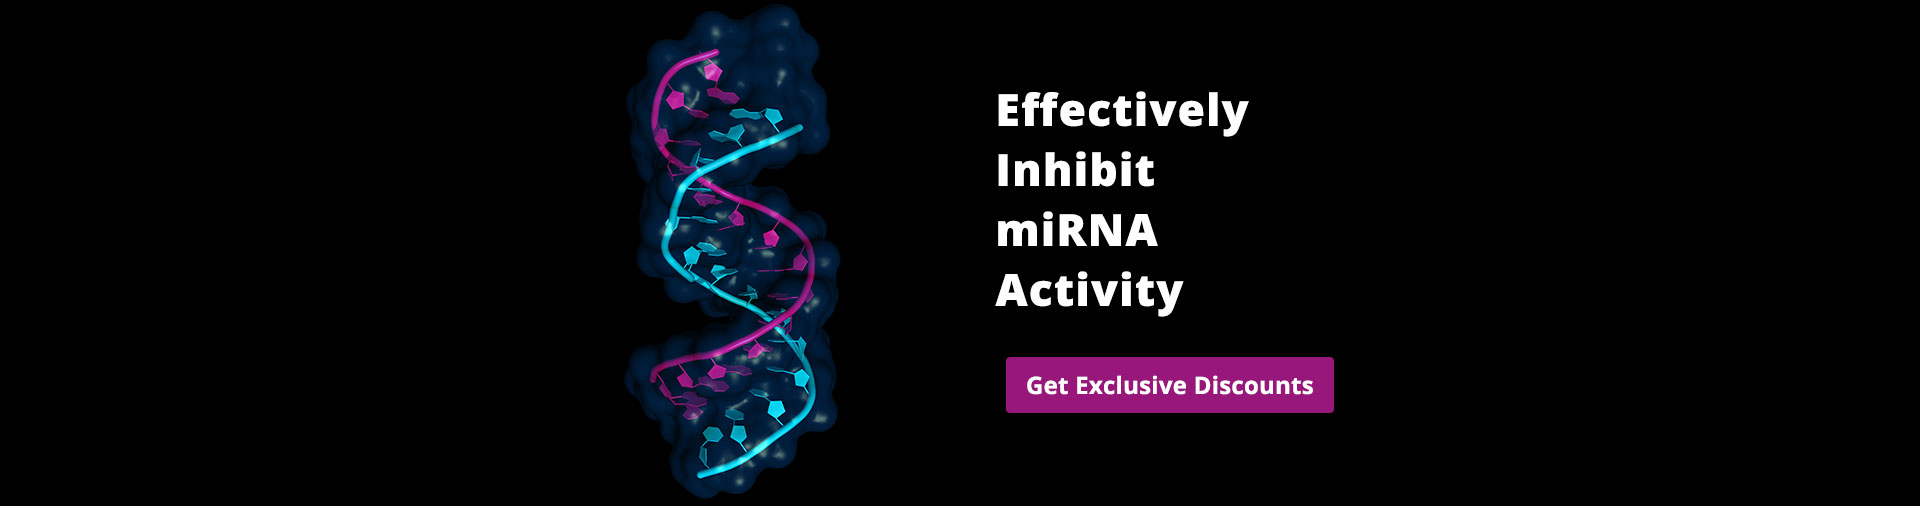 Effectively Inhibit miRNA Activity